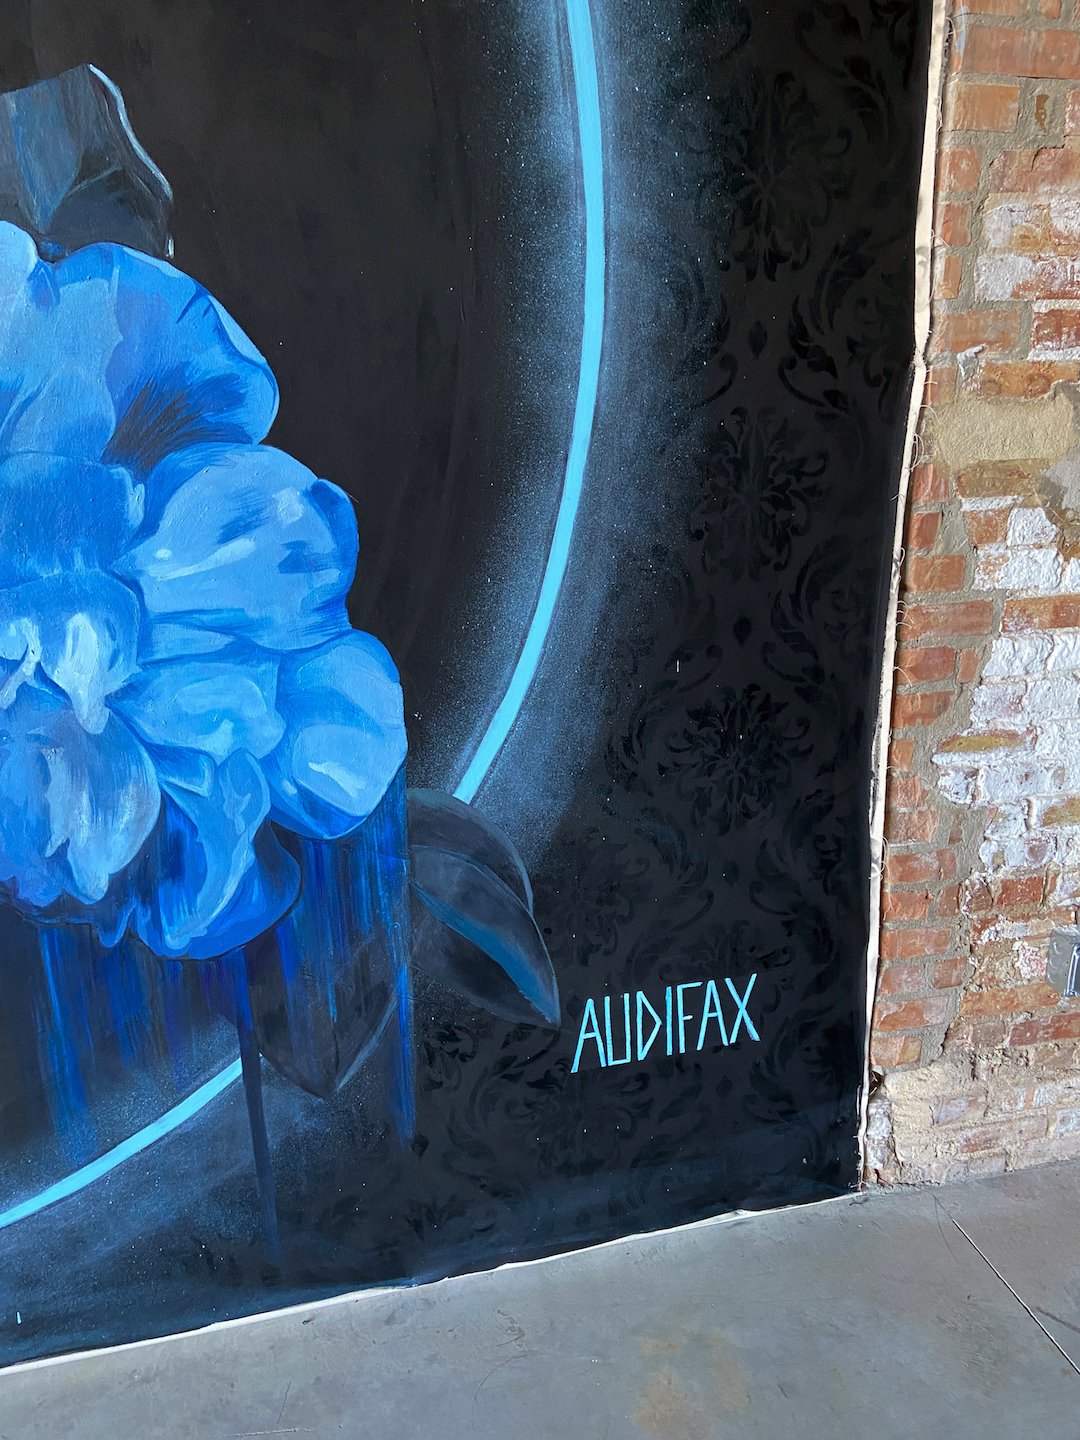 Audifax Mural Street Art Painting Flowers_5.JPG